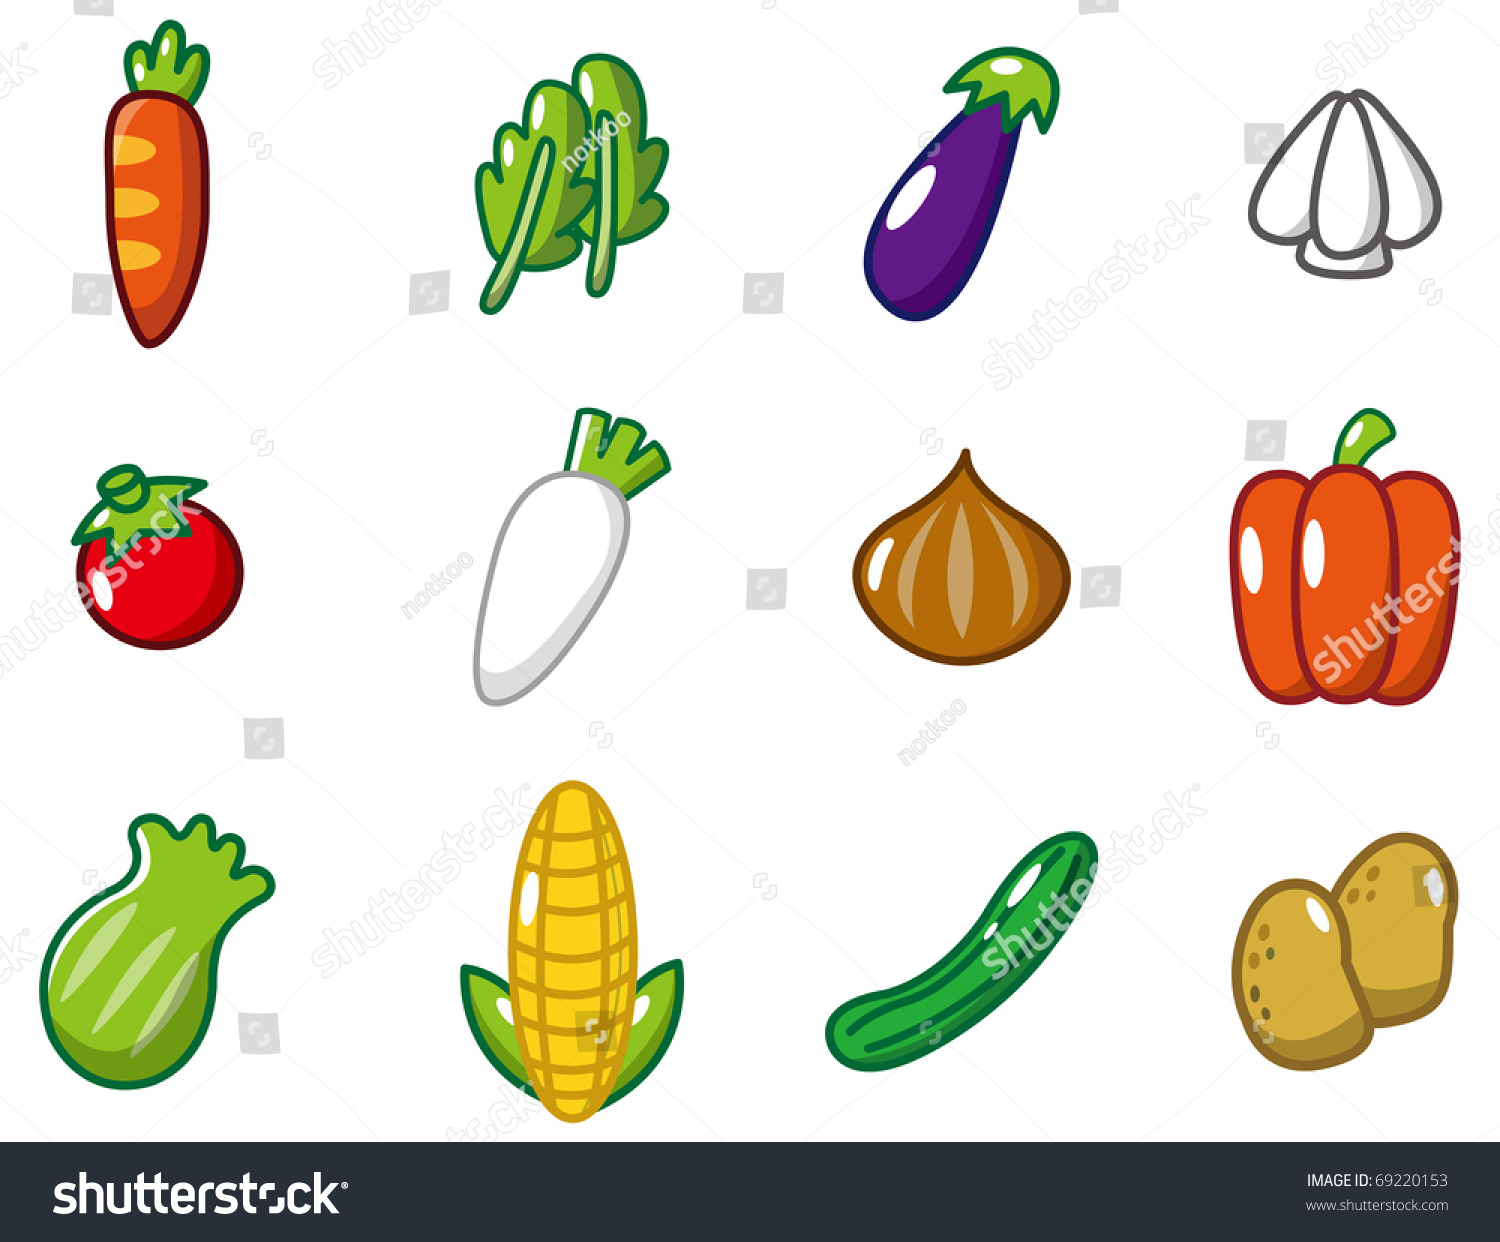 vegetables clipart images - photo #28